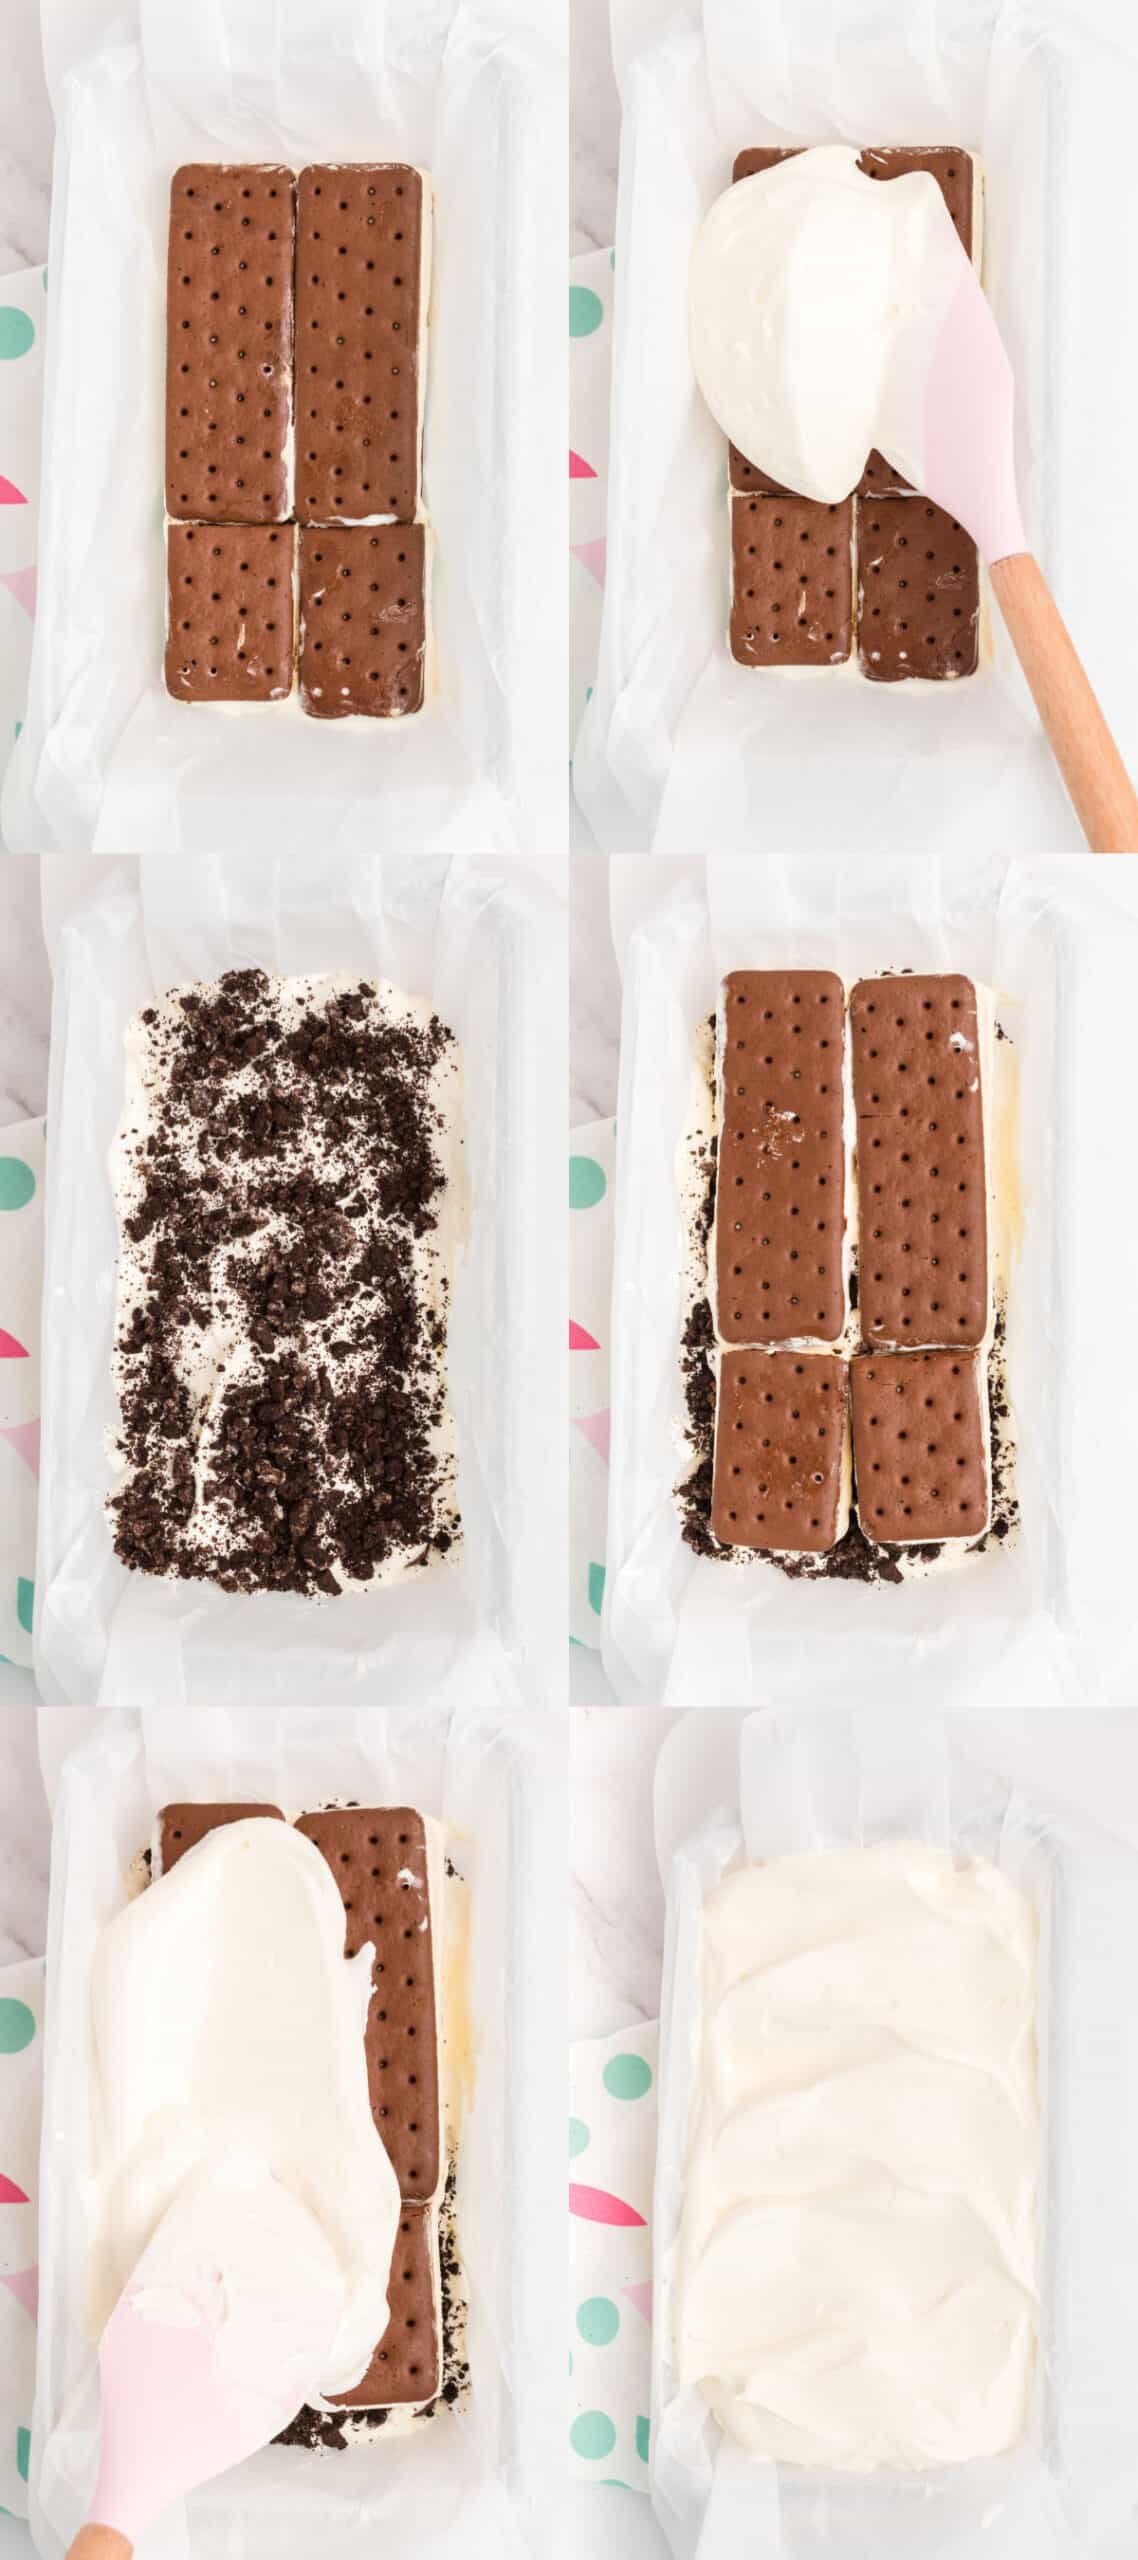 Easy Ice Cream Sandwich Cake ⋆ Real Housemoms